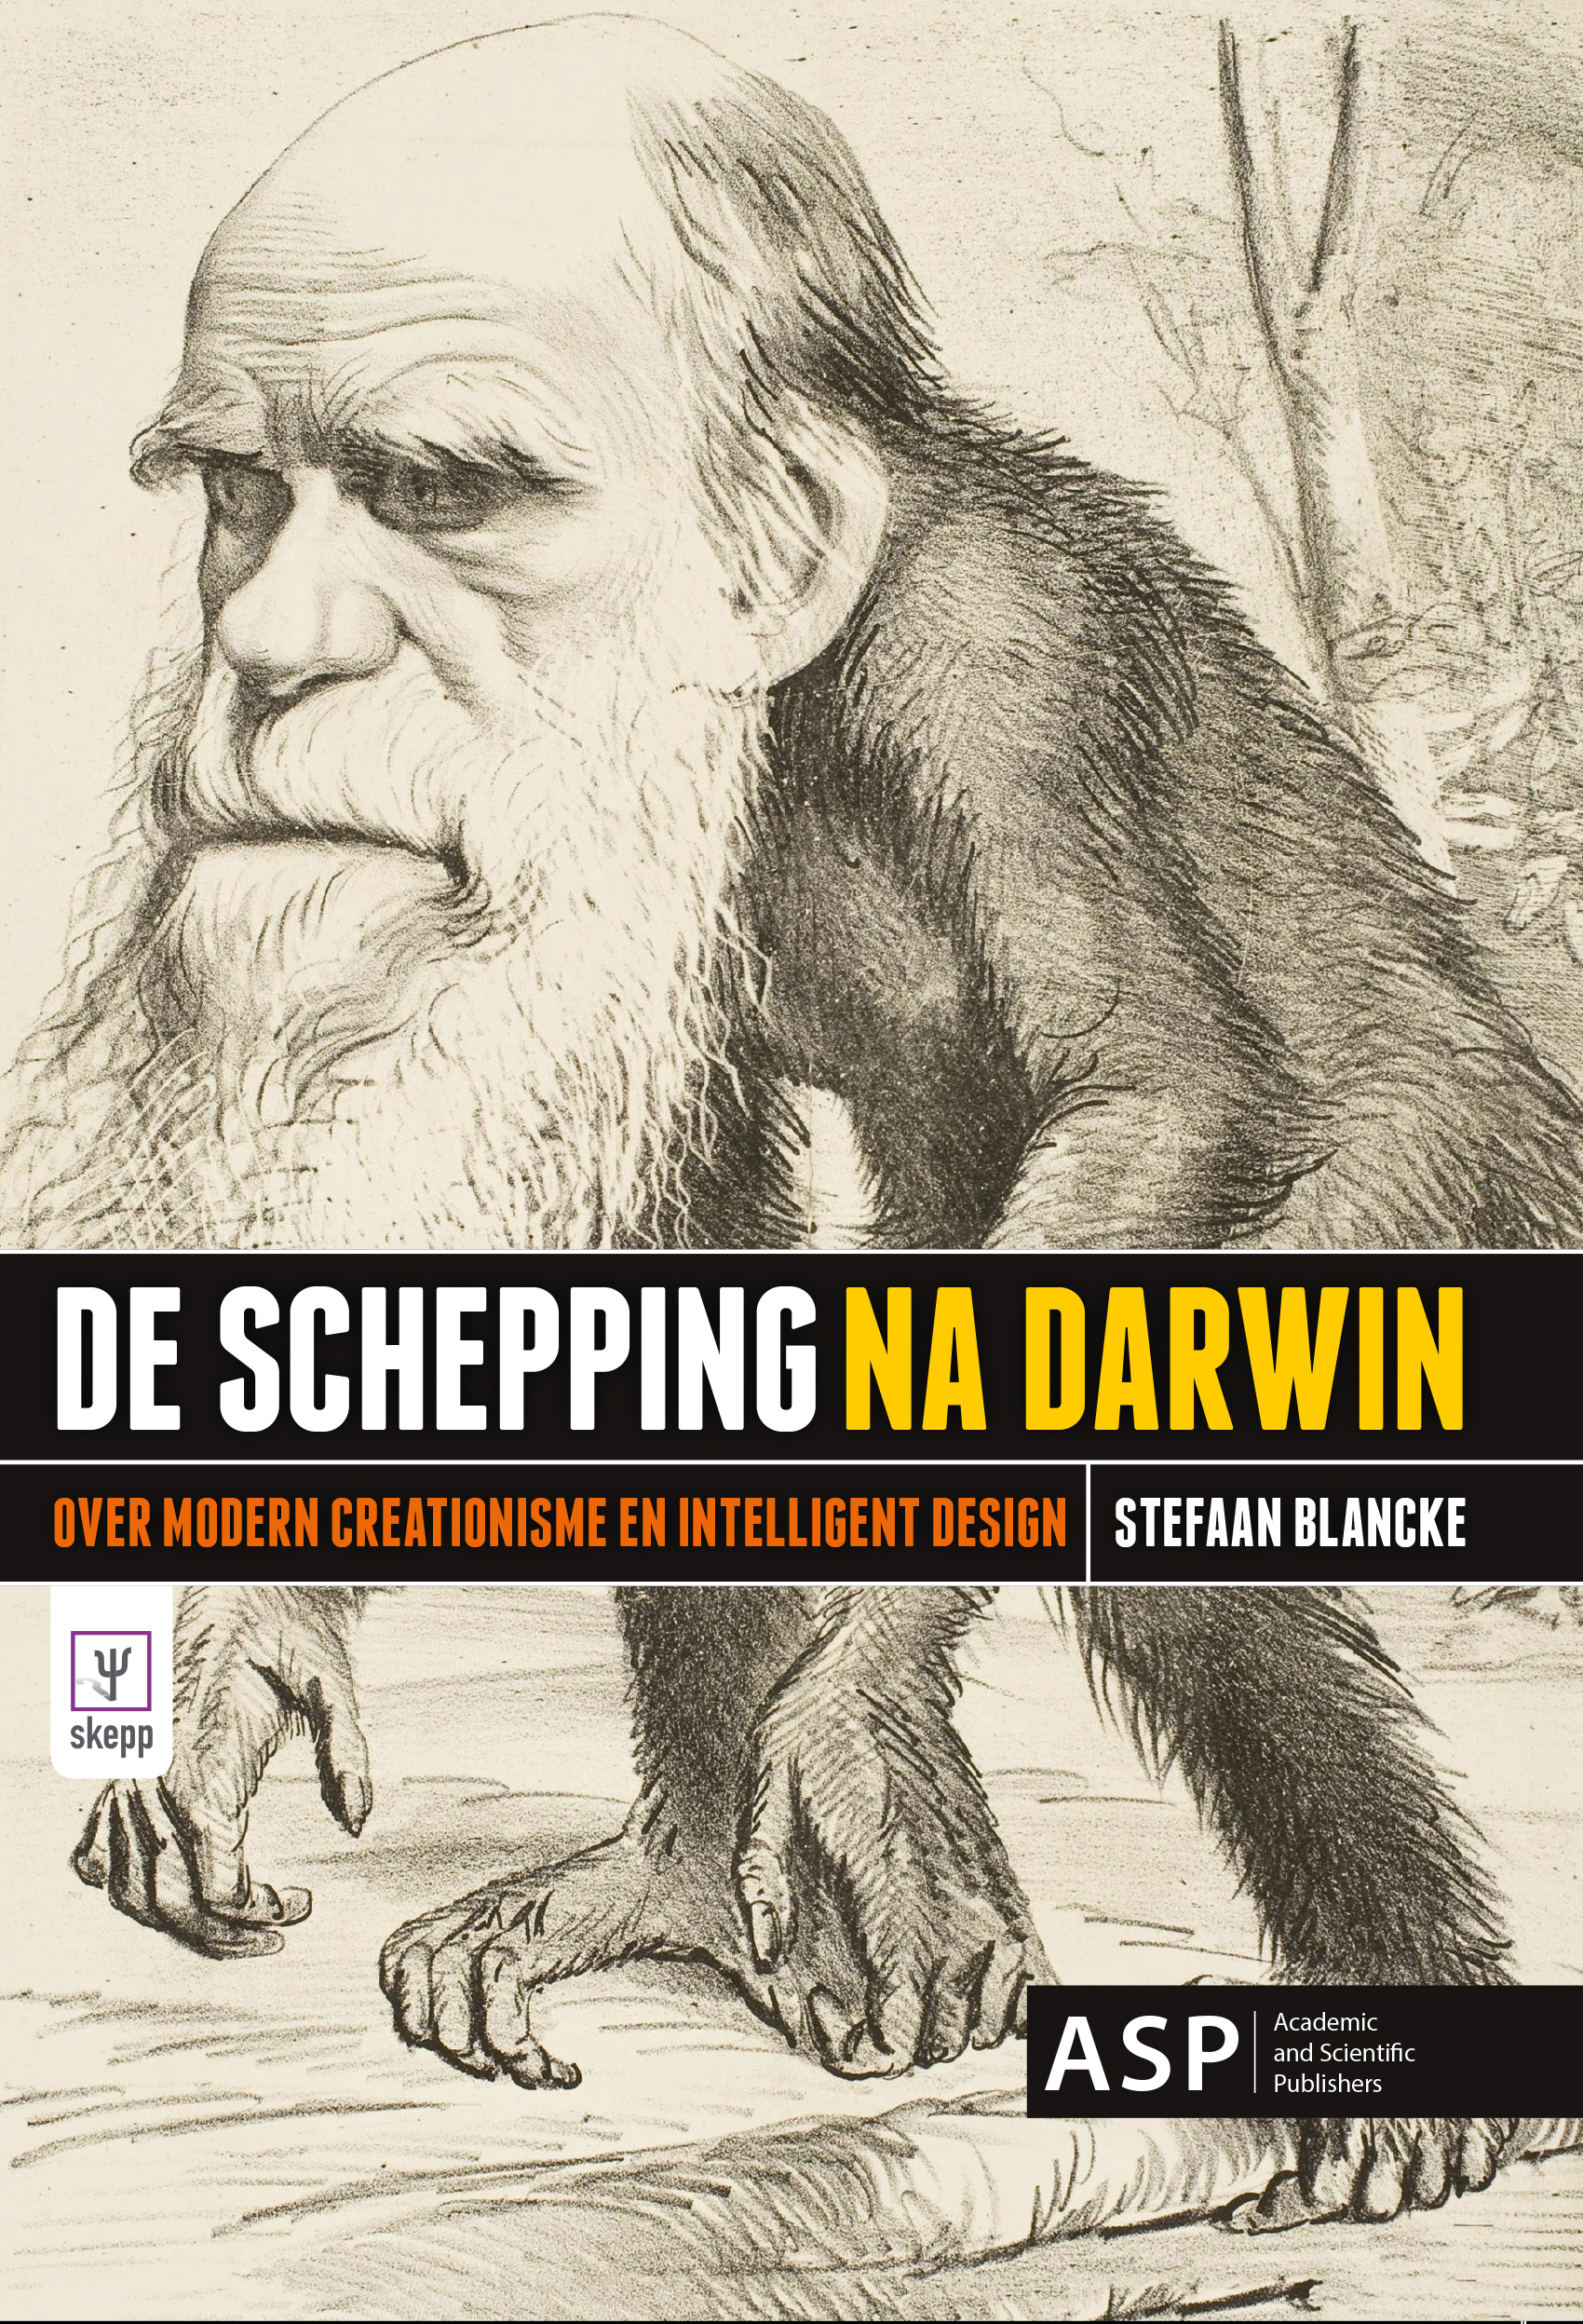 DE SCHEPPING NA DARWIN